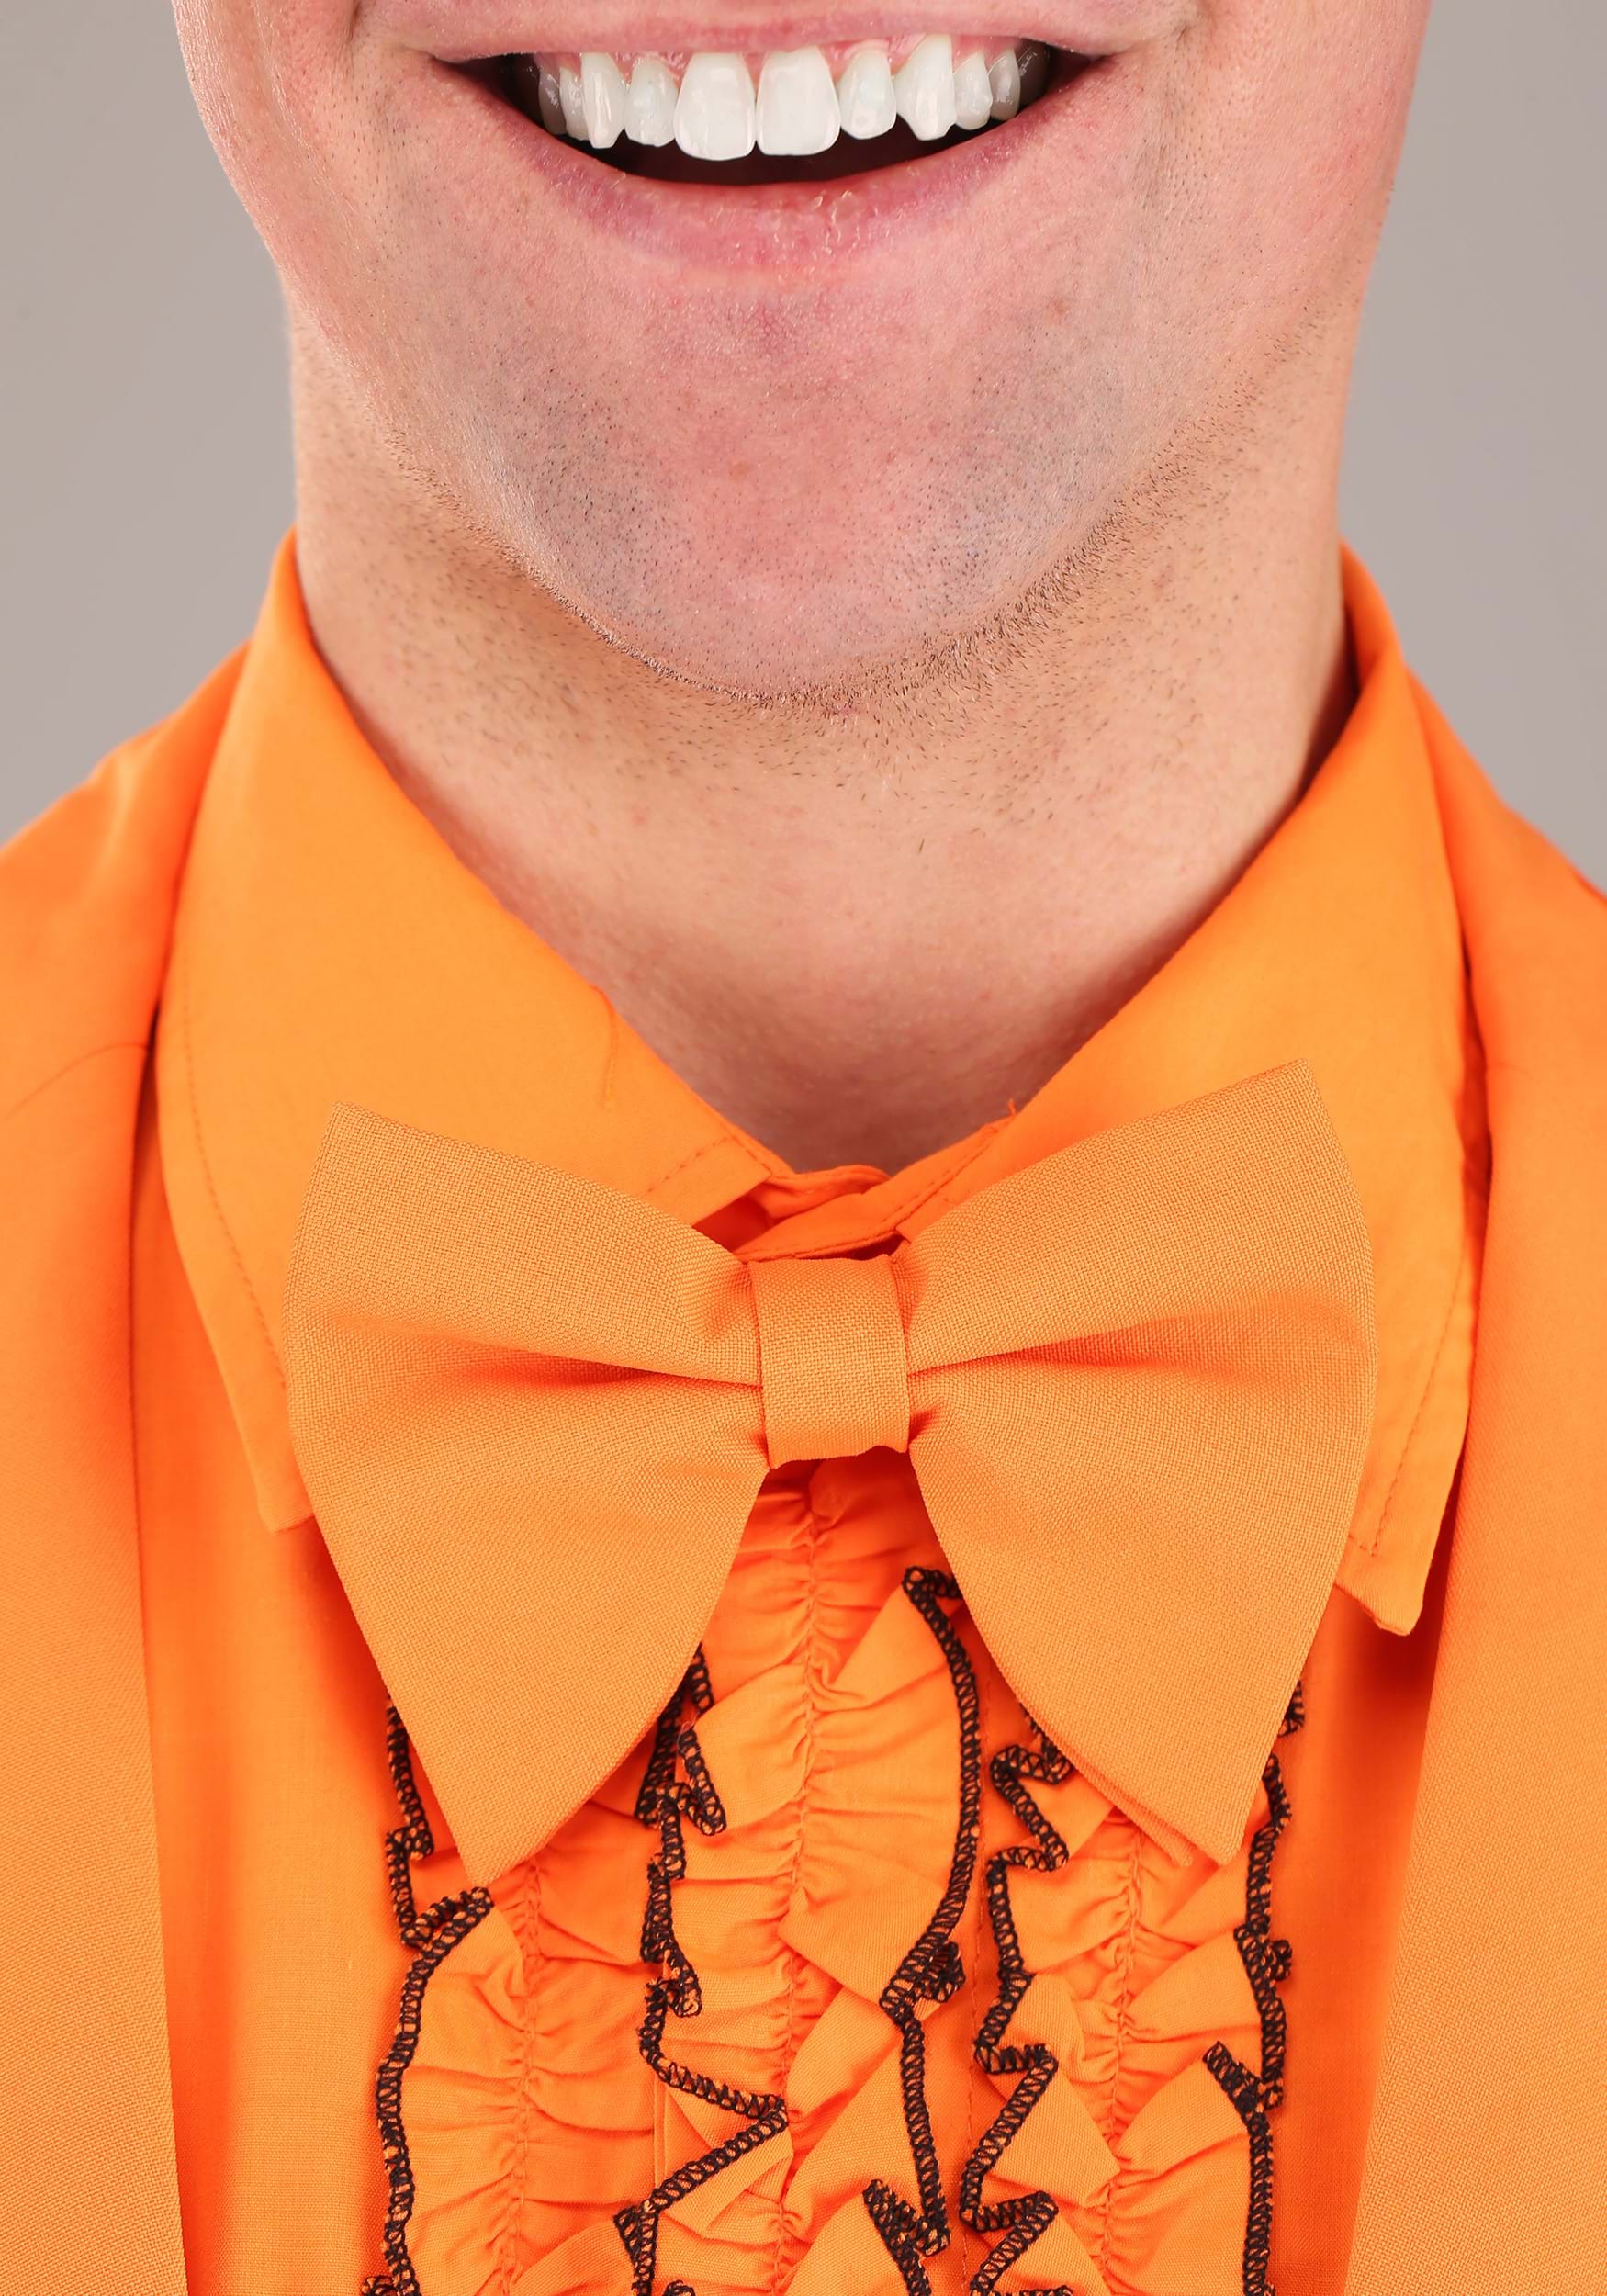 Orange Tuxedo, Orange Goofball Costume